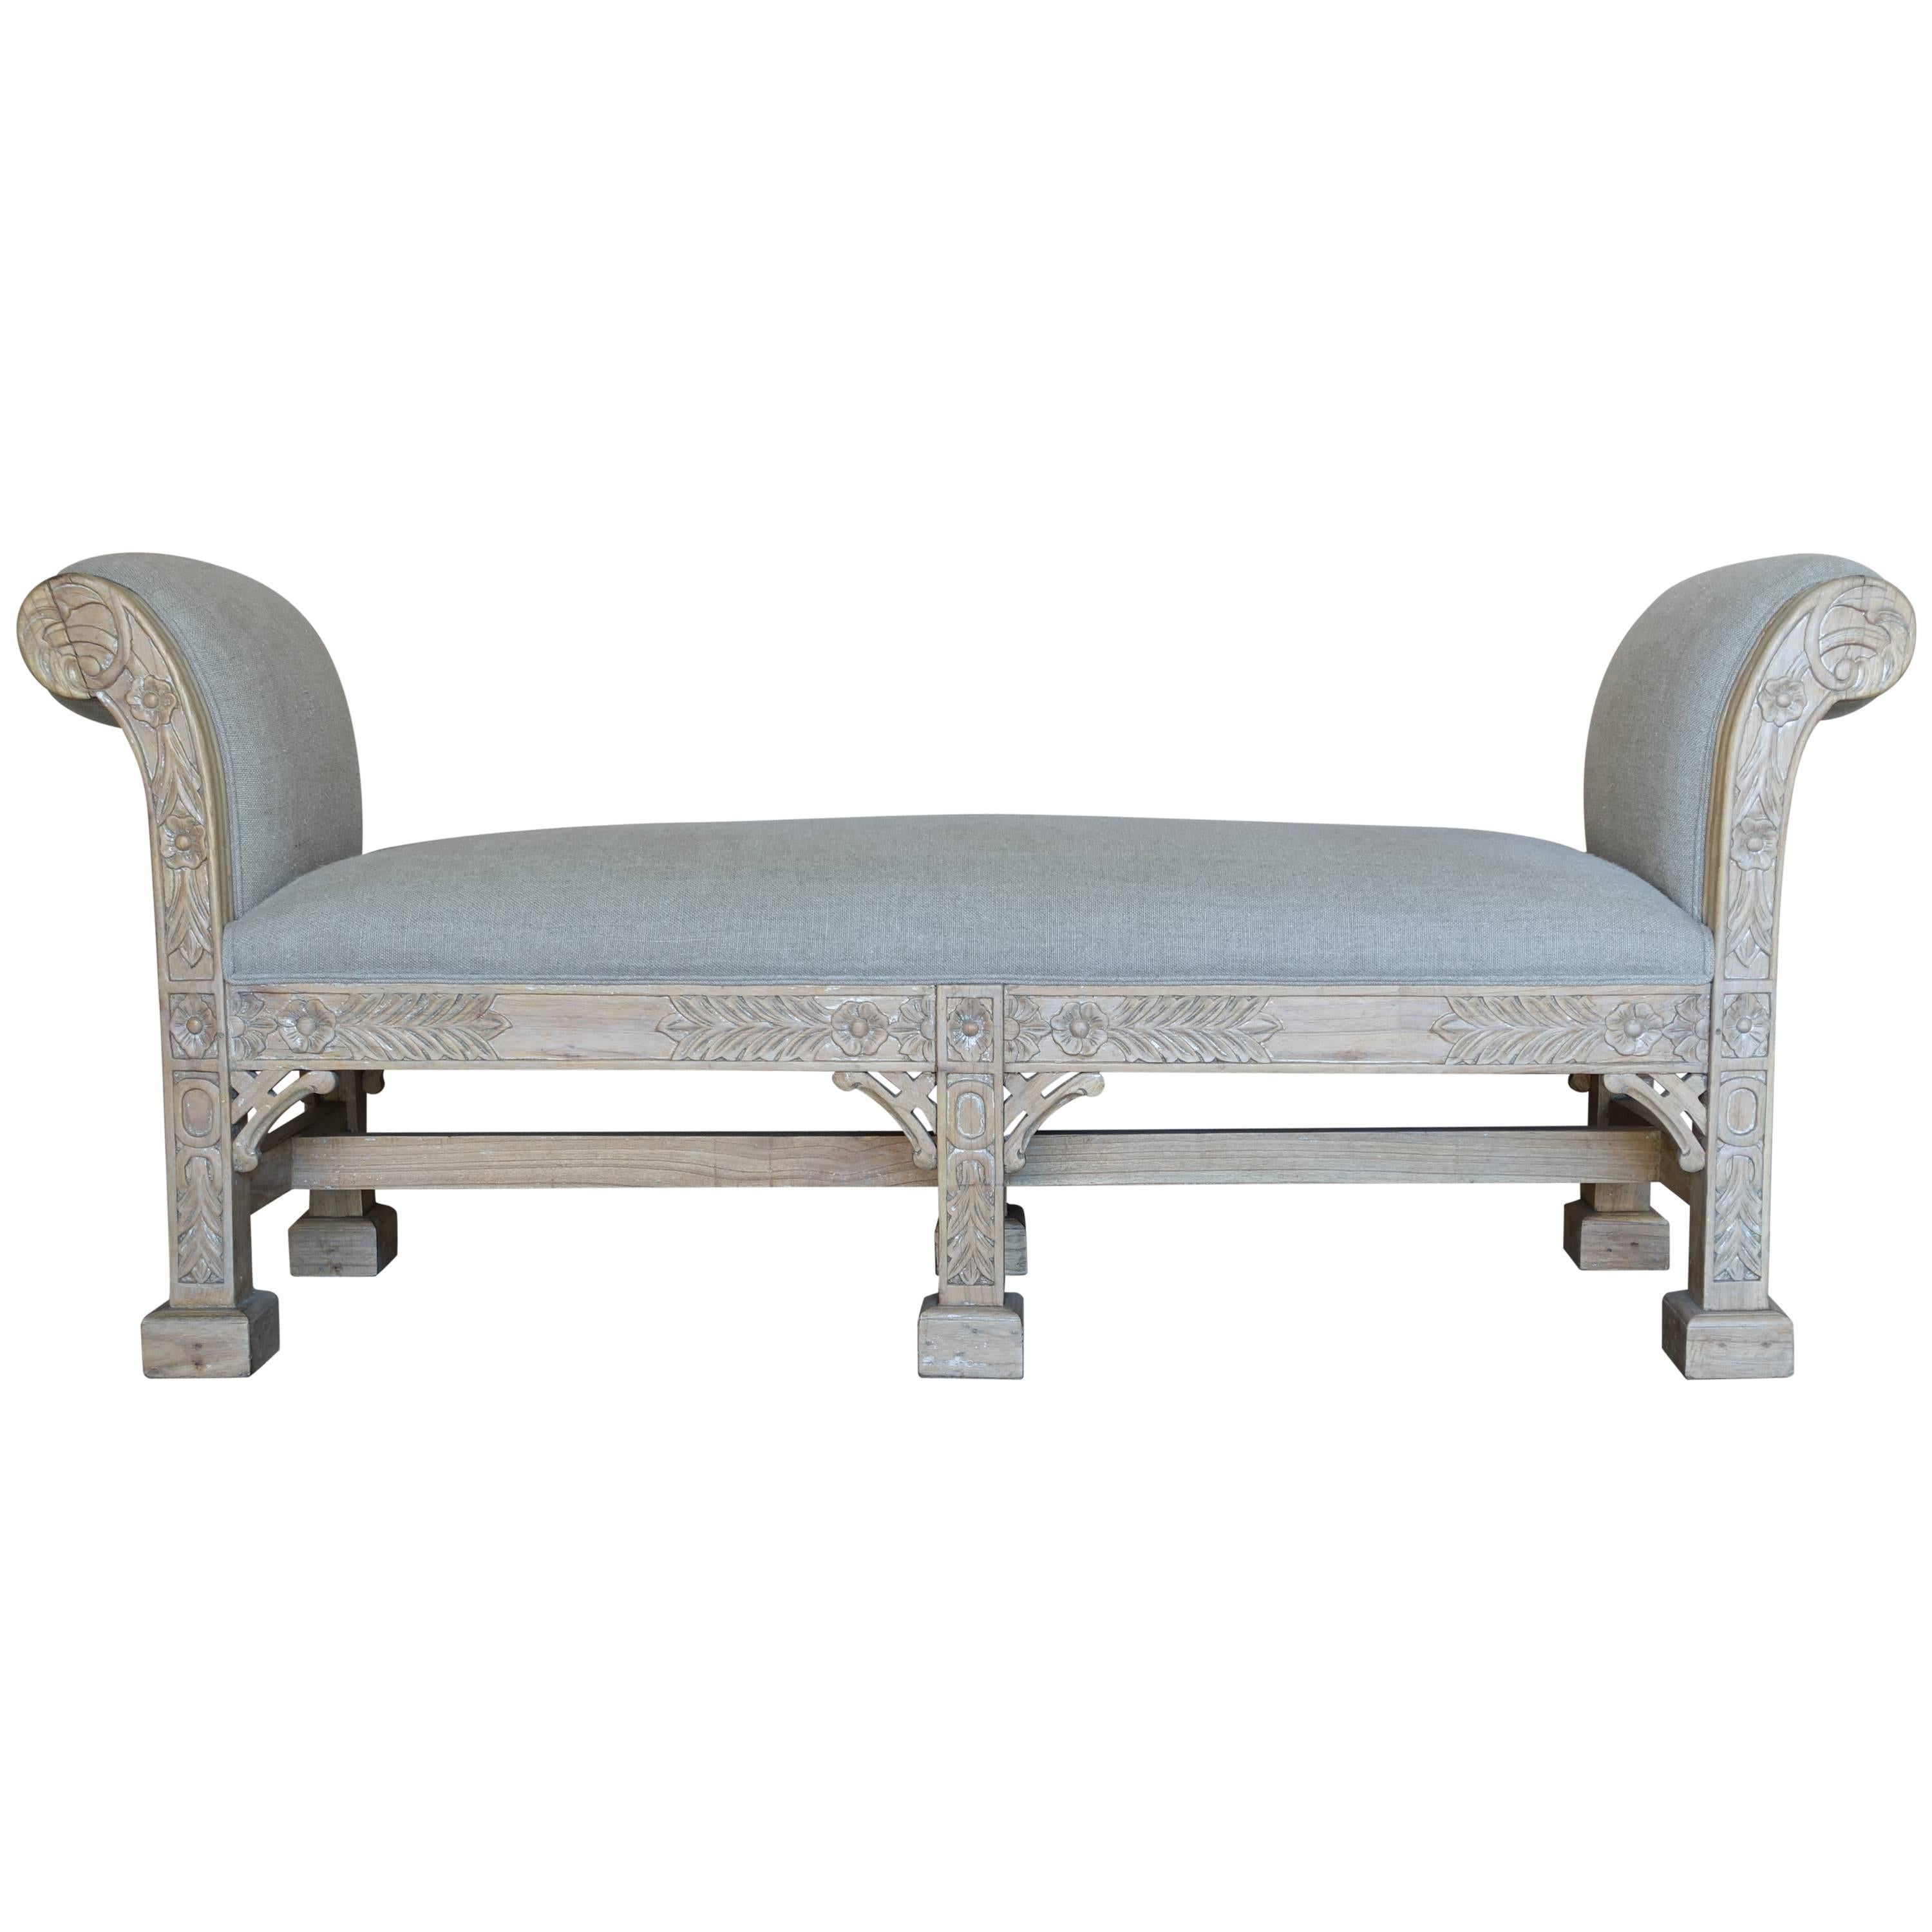 English Chinoiserie Style Six-Legged Bench